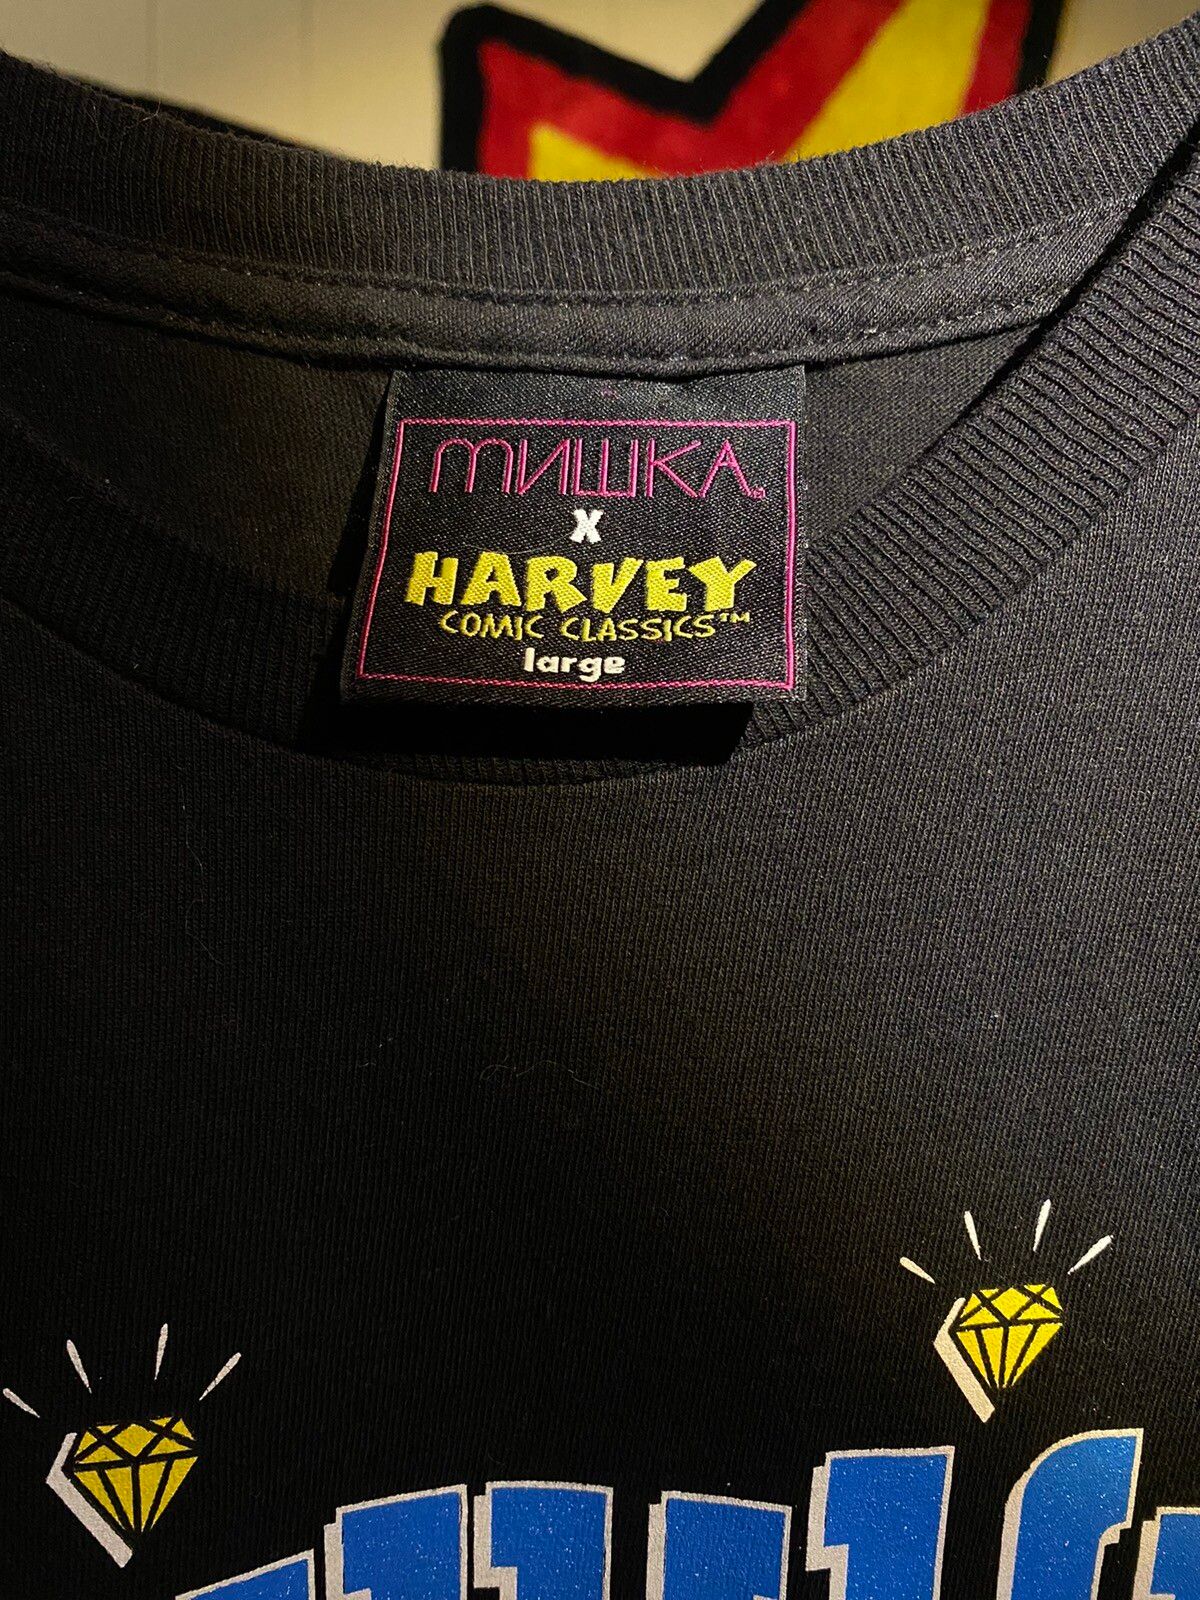 Mishka Mishka x Harvey Comic Classics Richie Rich T-shirt Size US L / EU 52-54 / 3 - 3 Preview